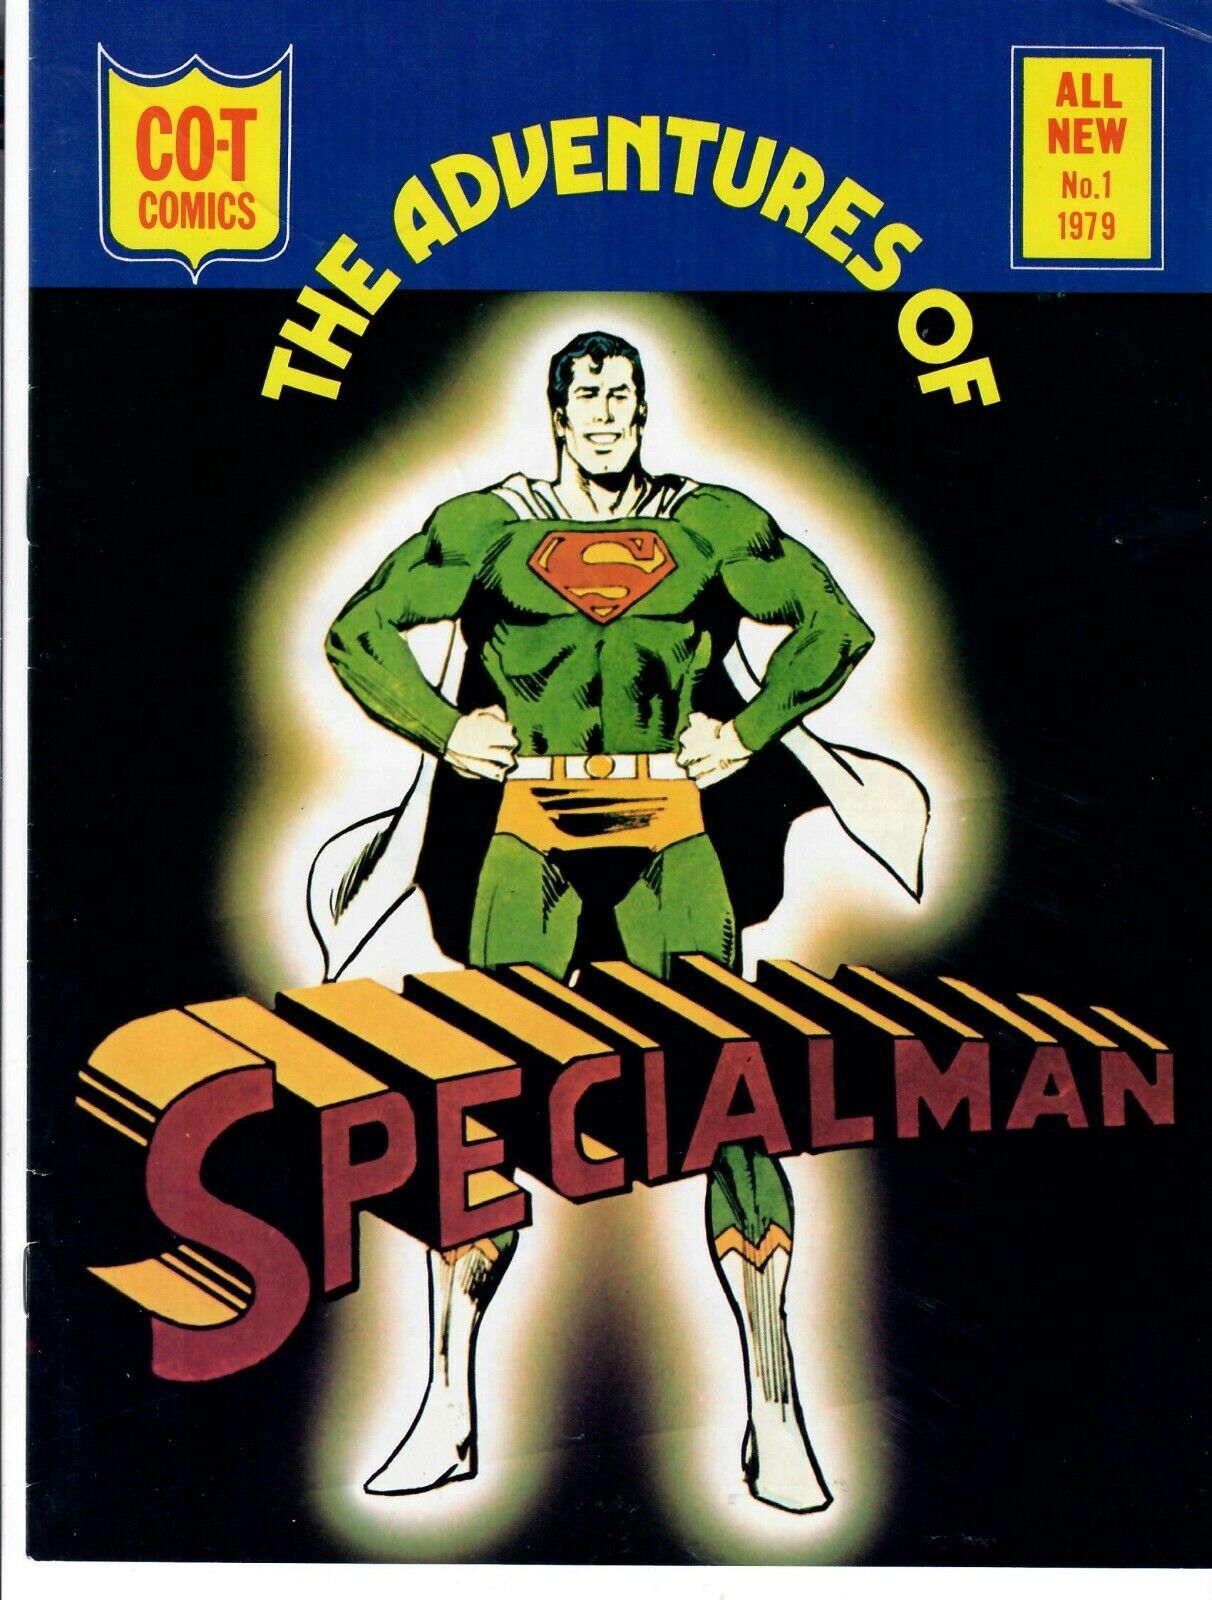 Adventures of Specialman #1 (1979 Co-Tylenol) Advertisement - Superman Parody